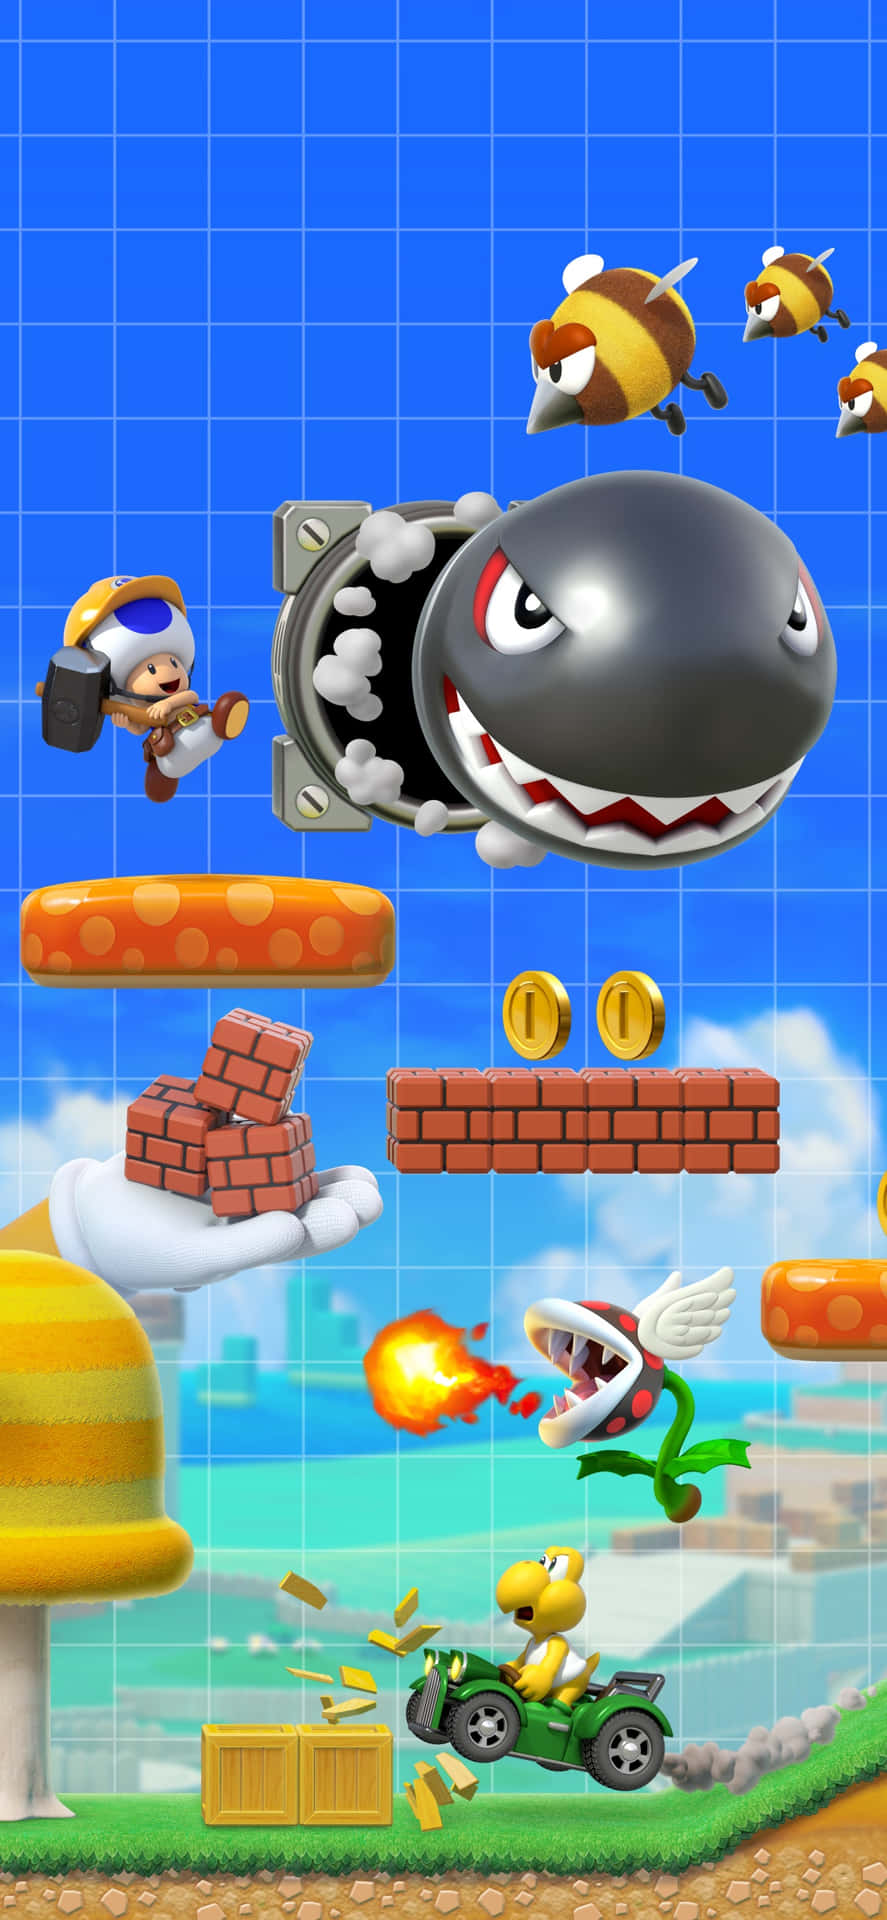 Create Your Own Unique Super Mario Adventure Wallpaper